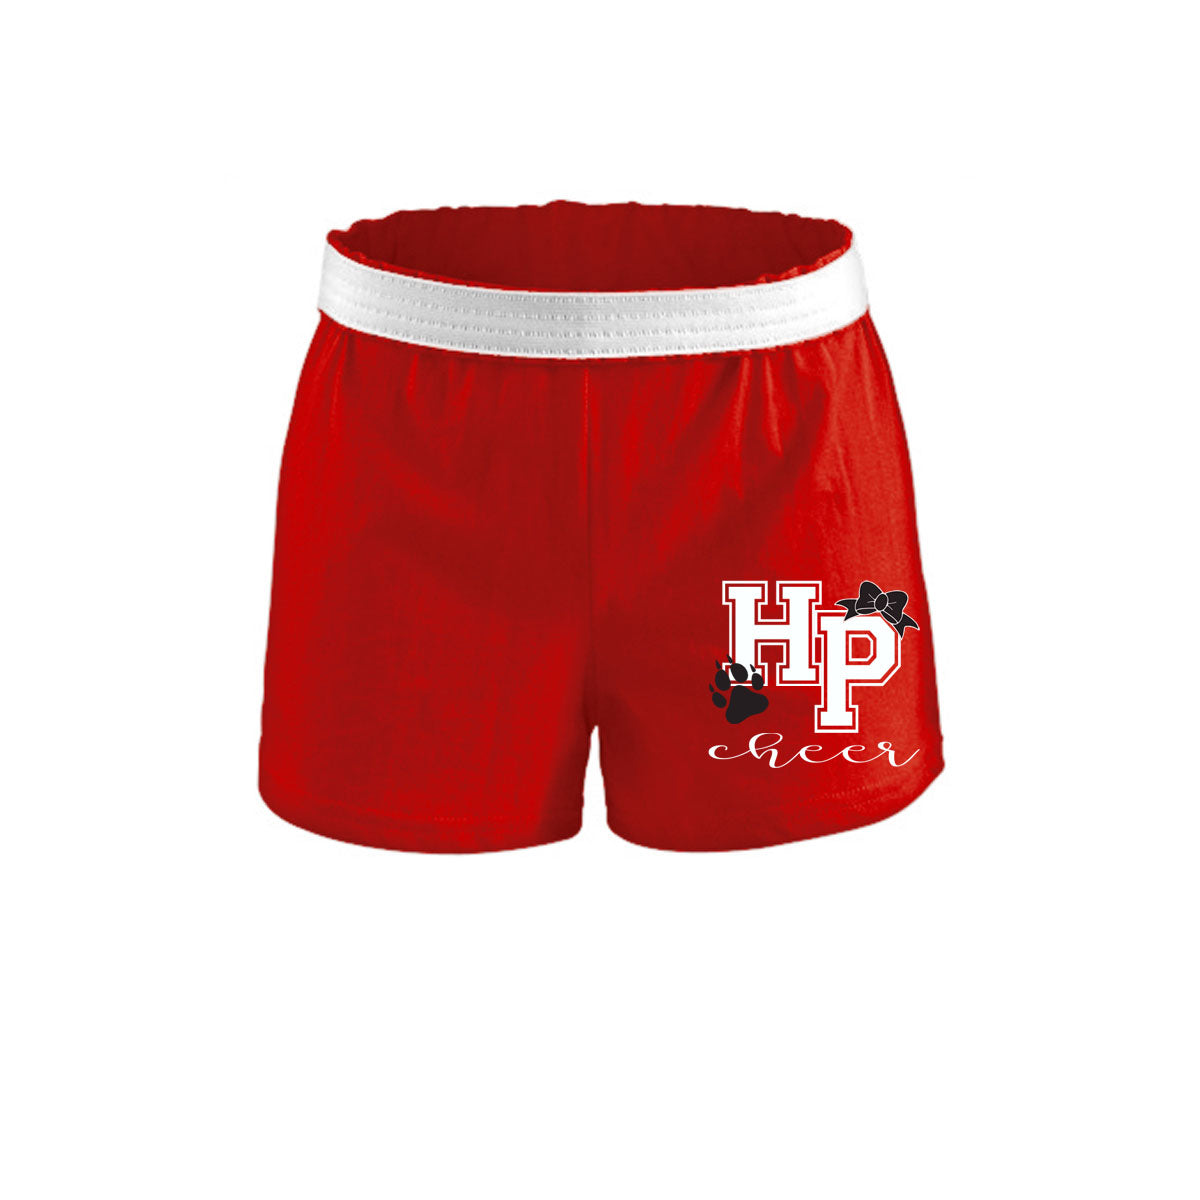 High Point Cheer Design 3 Girls Shorts